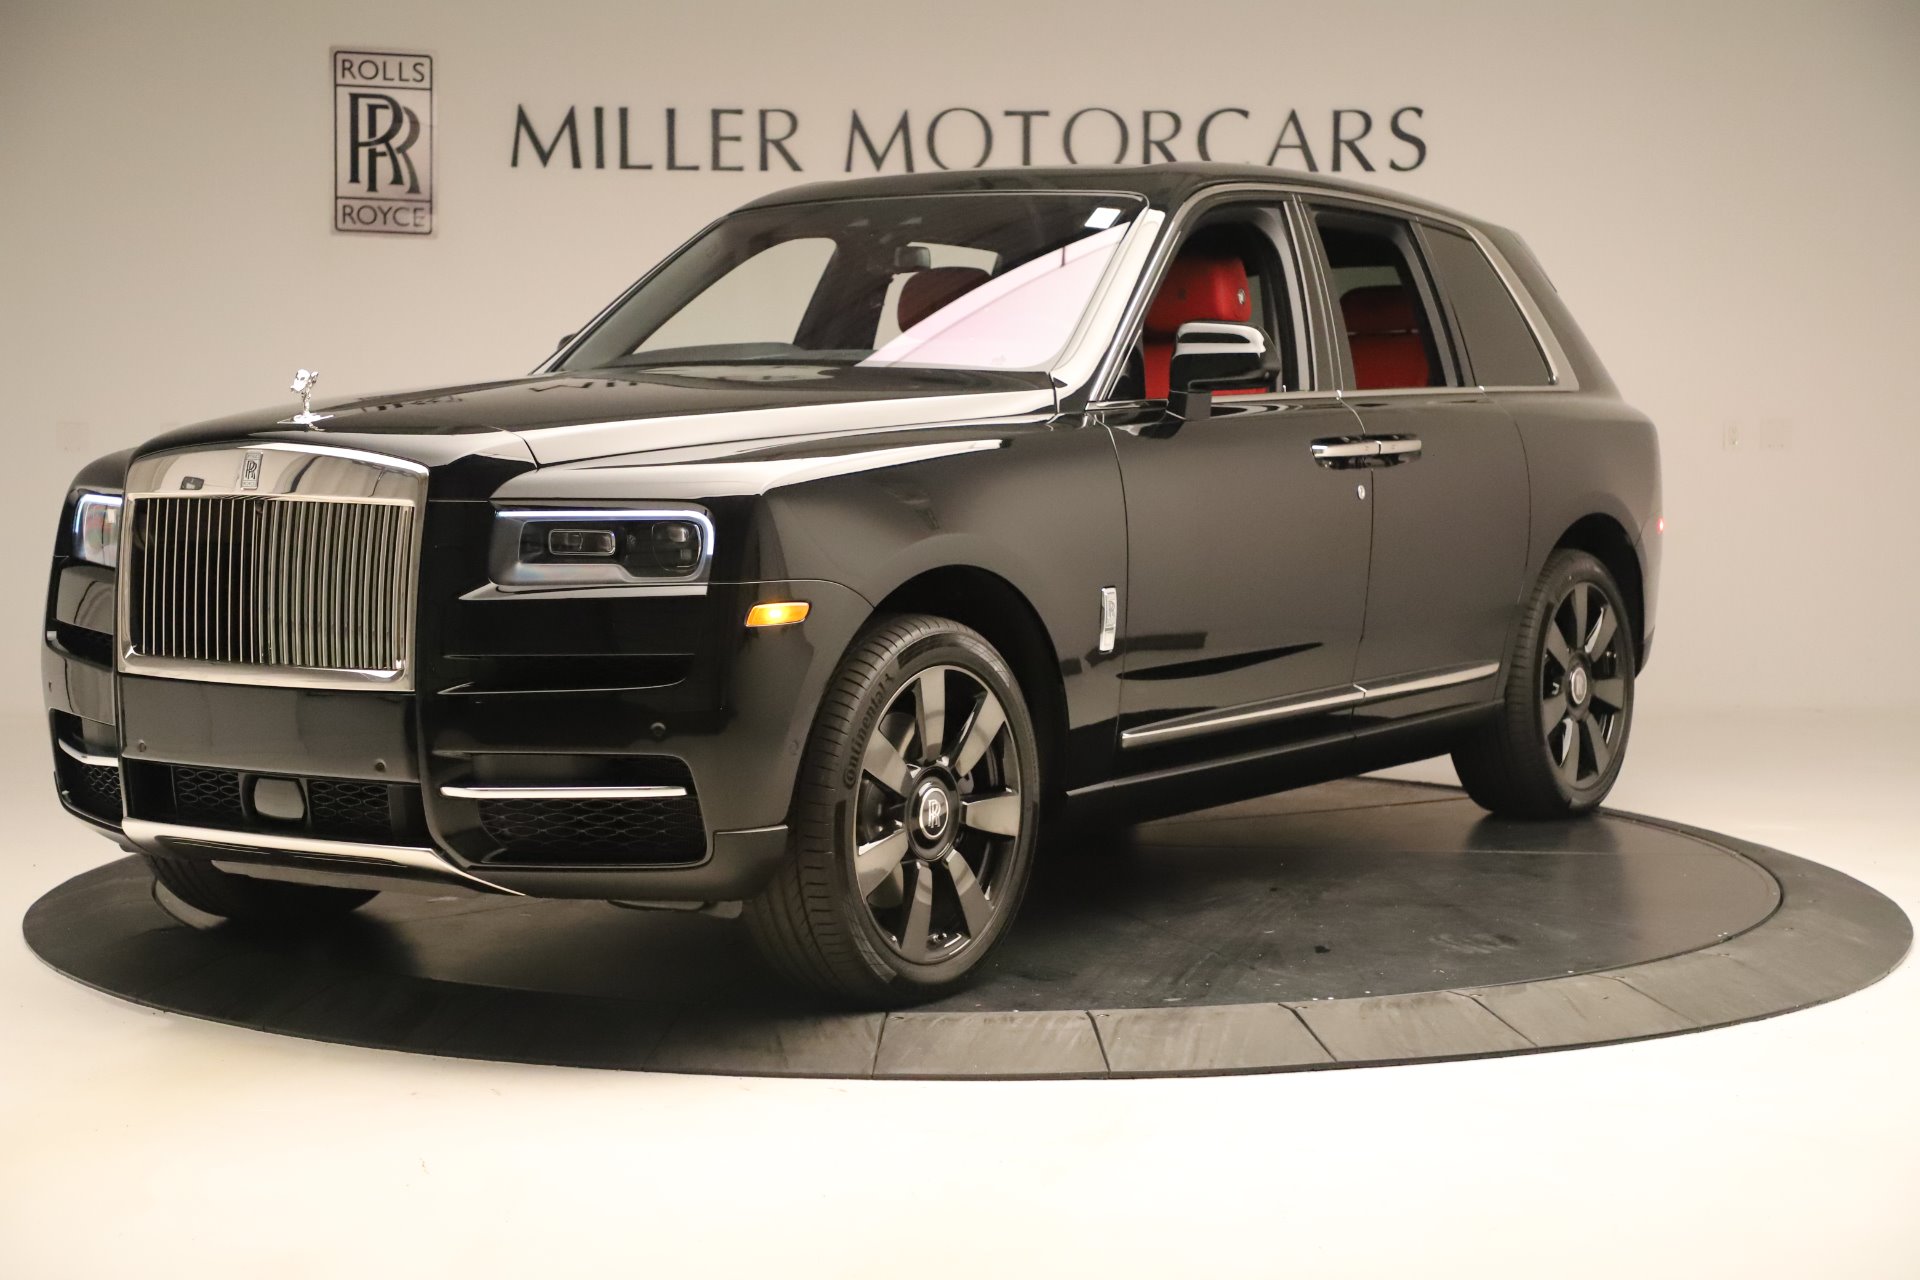 New 2020 Rolls Royce Cullinan For Sale Miller Motorcars